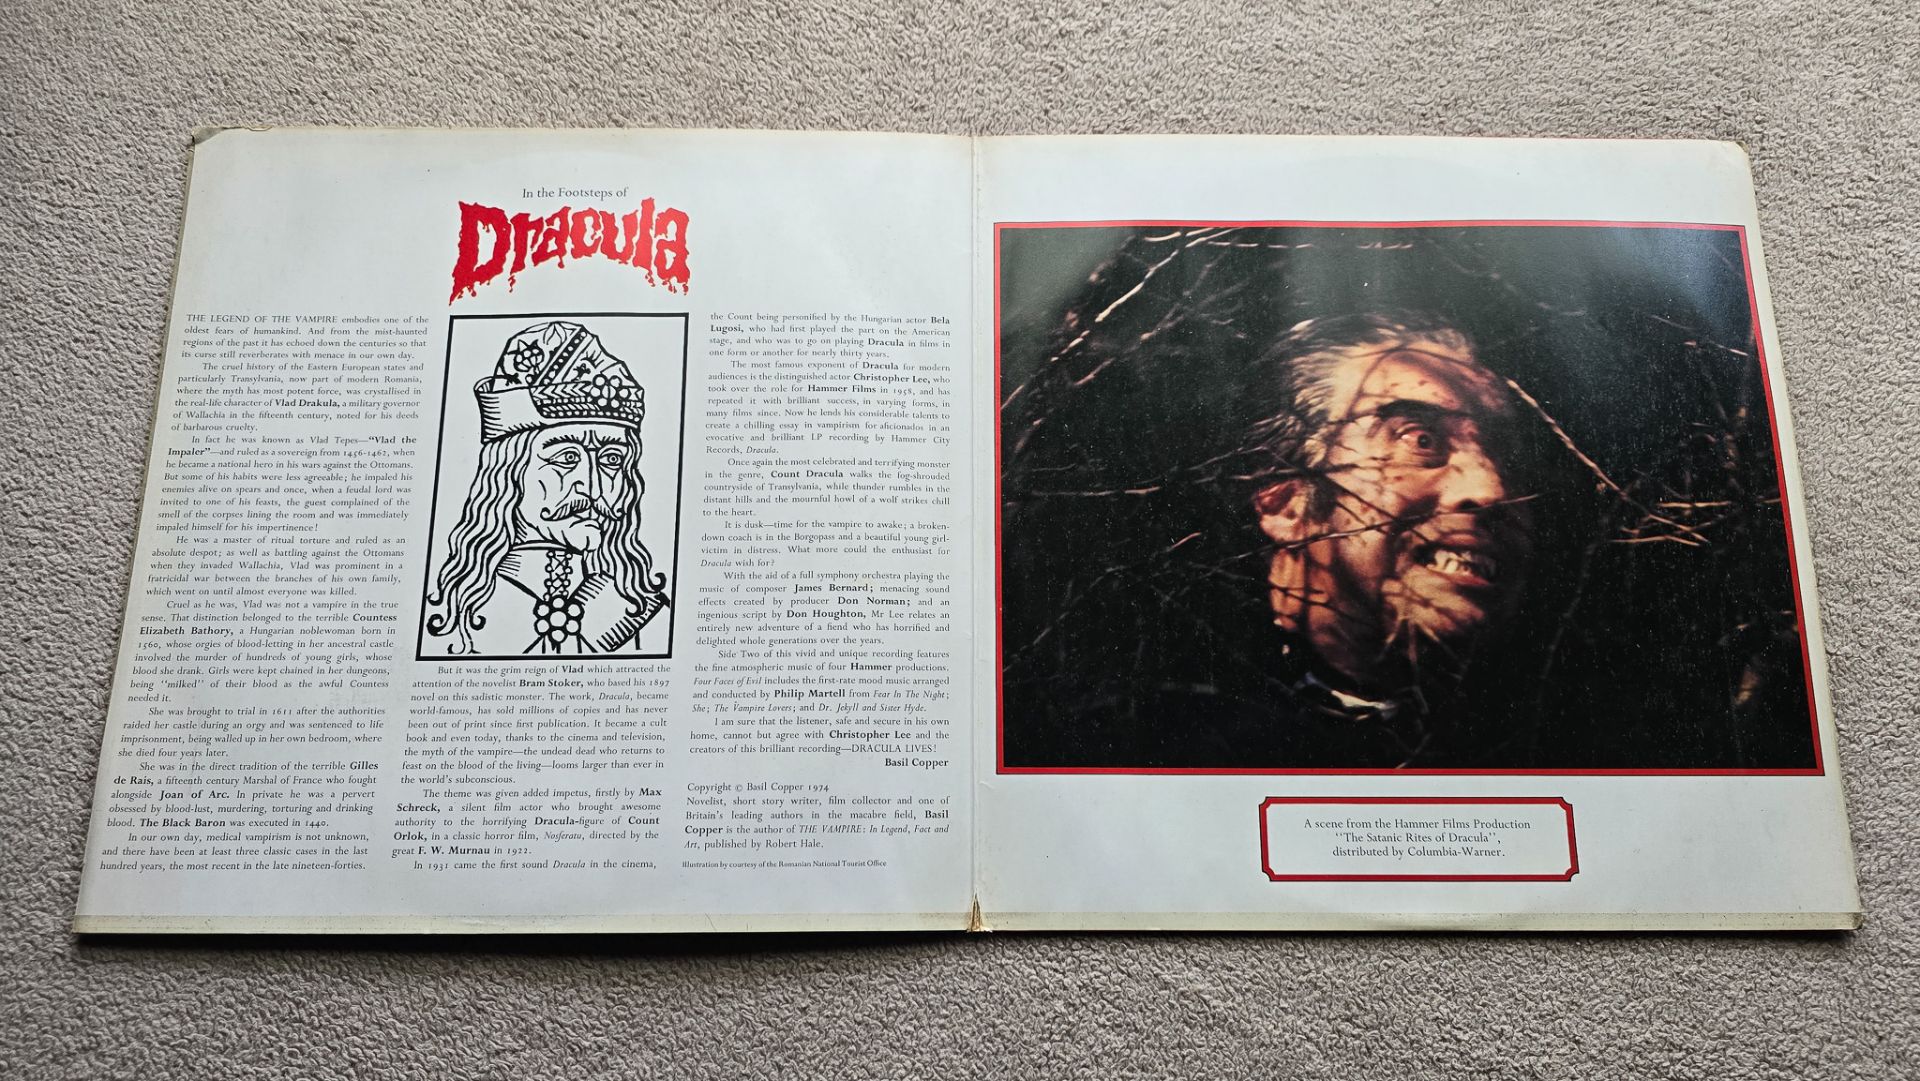 James Bernard Christopher Lee Hammer Presents Dracula Original UK Gatefold LP Mint - Image 4 of 6